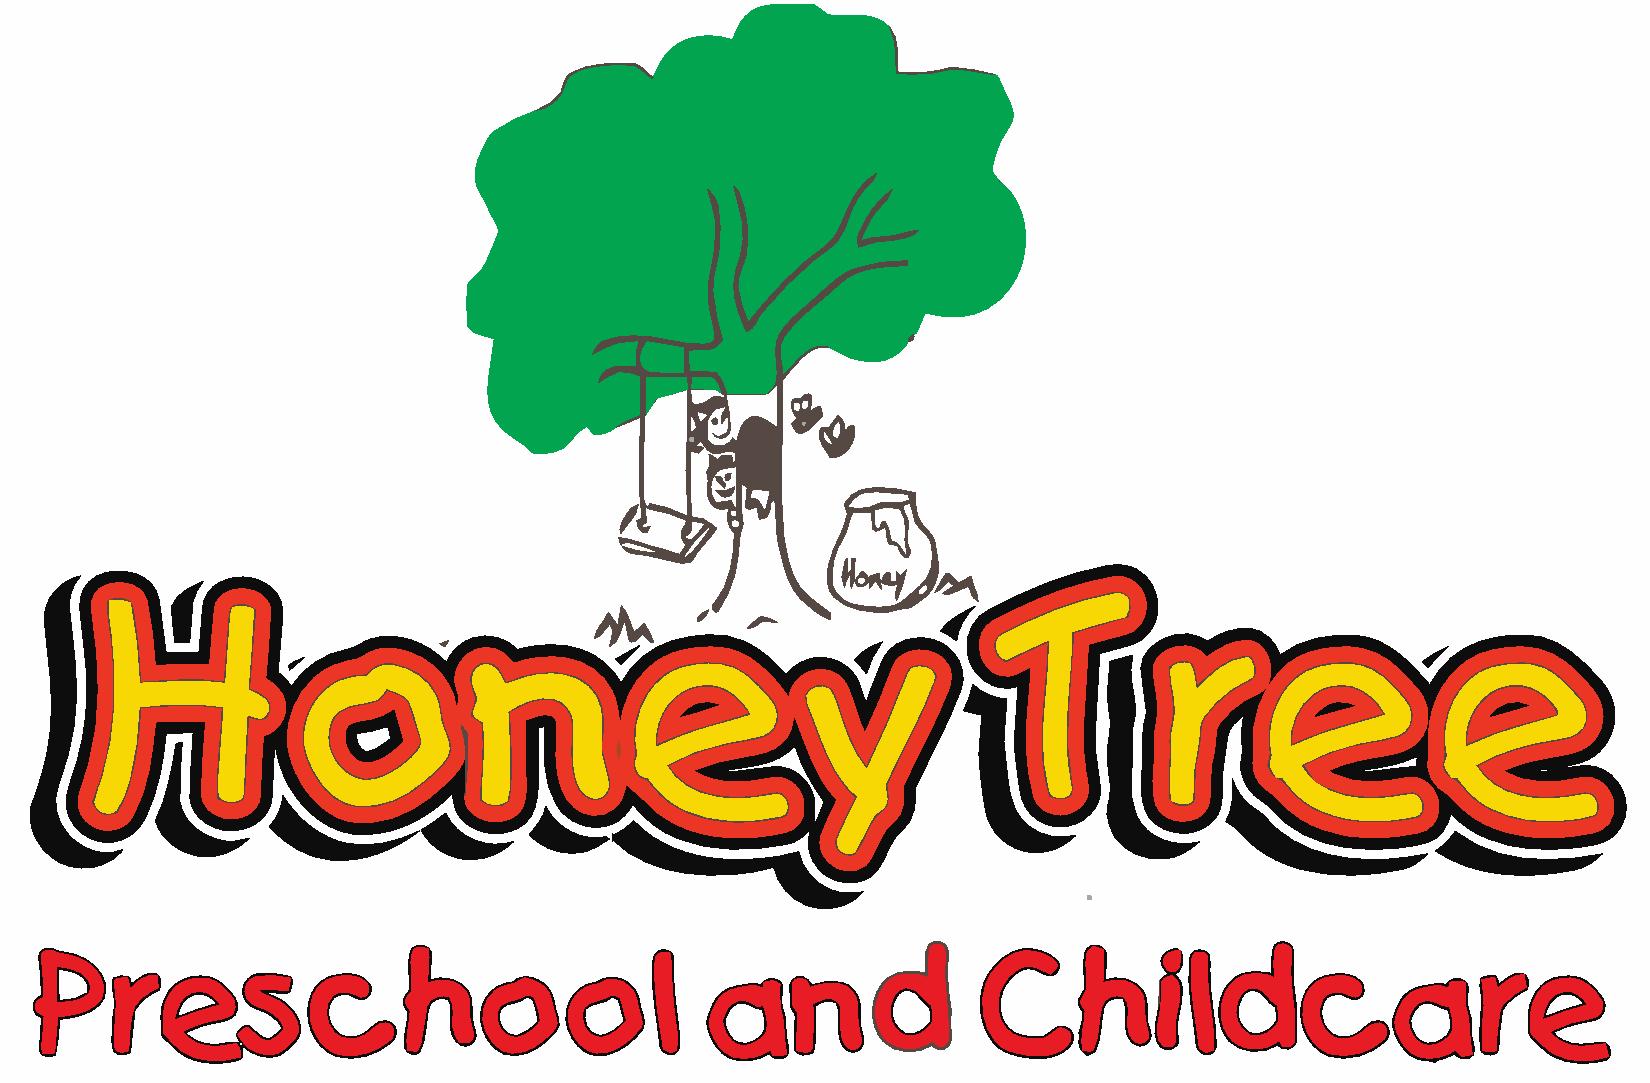 HONEY TREE PRESCHOOL AND CHILD CARE CENTER